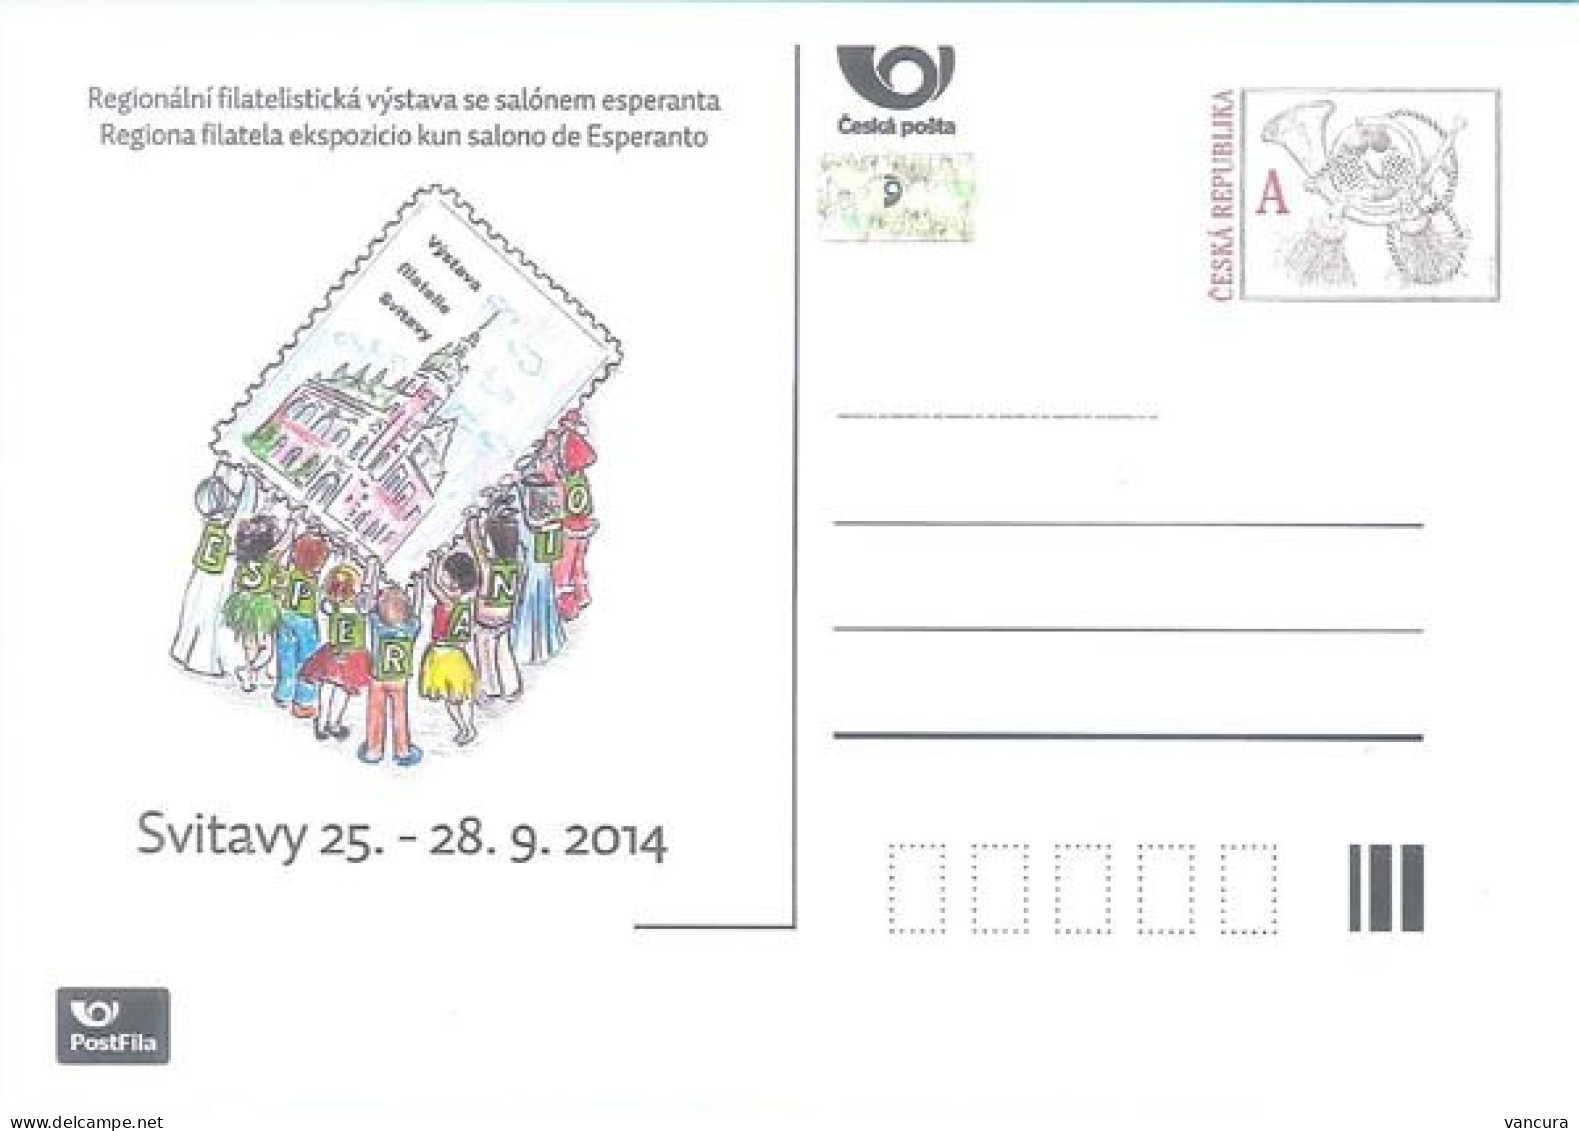 CDV A 203 Czech Republic Svitavy/Zwittau Stamp Exhibition With Esperanto Saloon 2014 - Cartes Postales